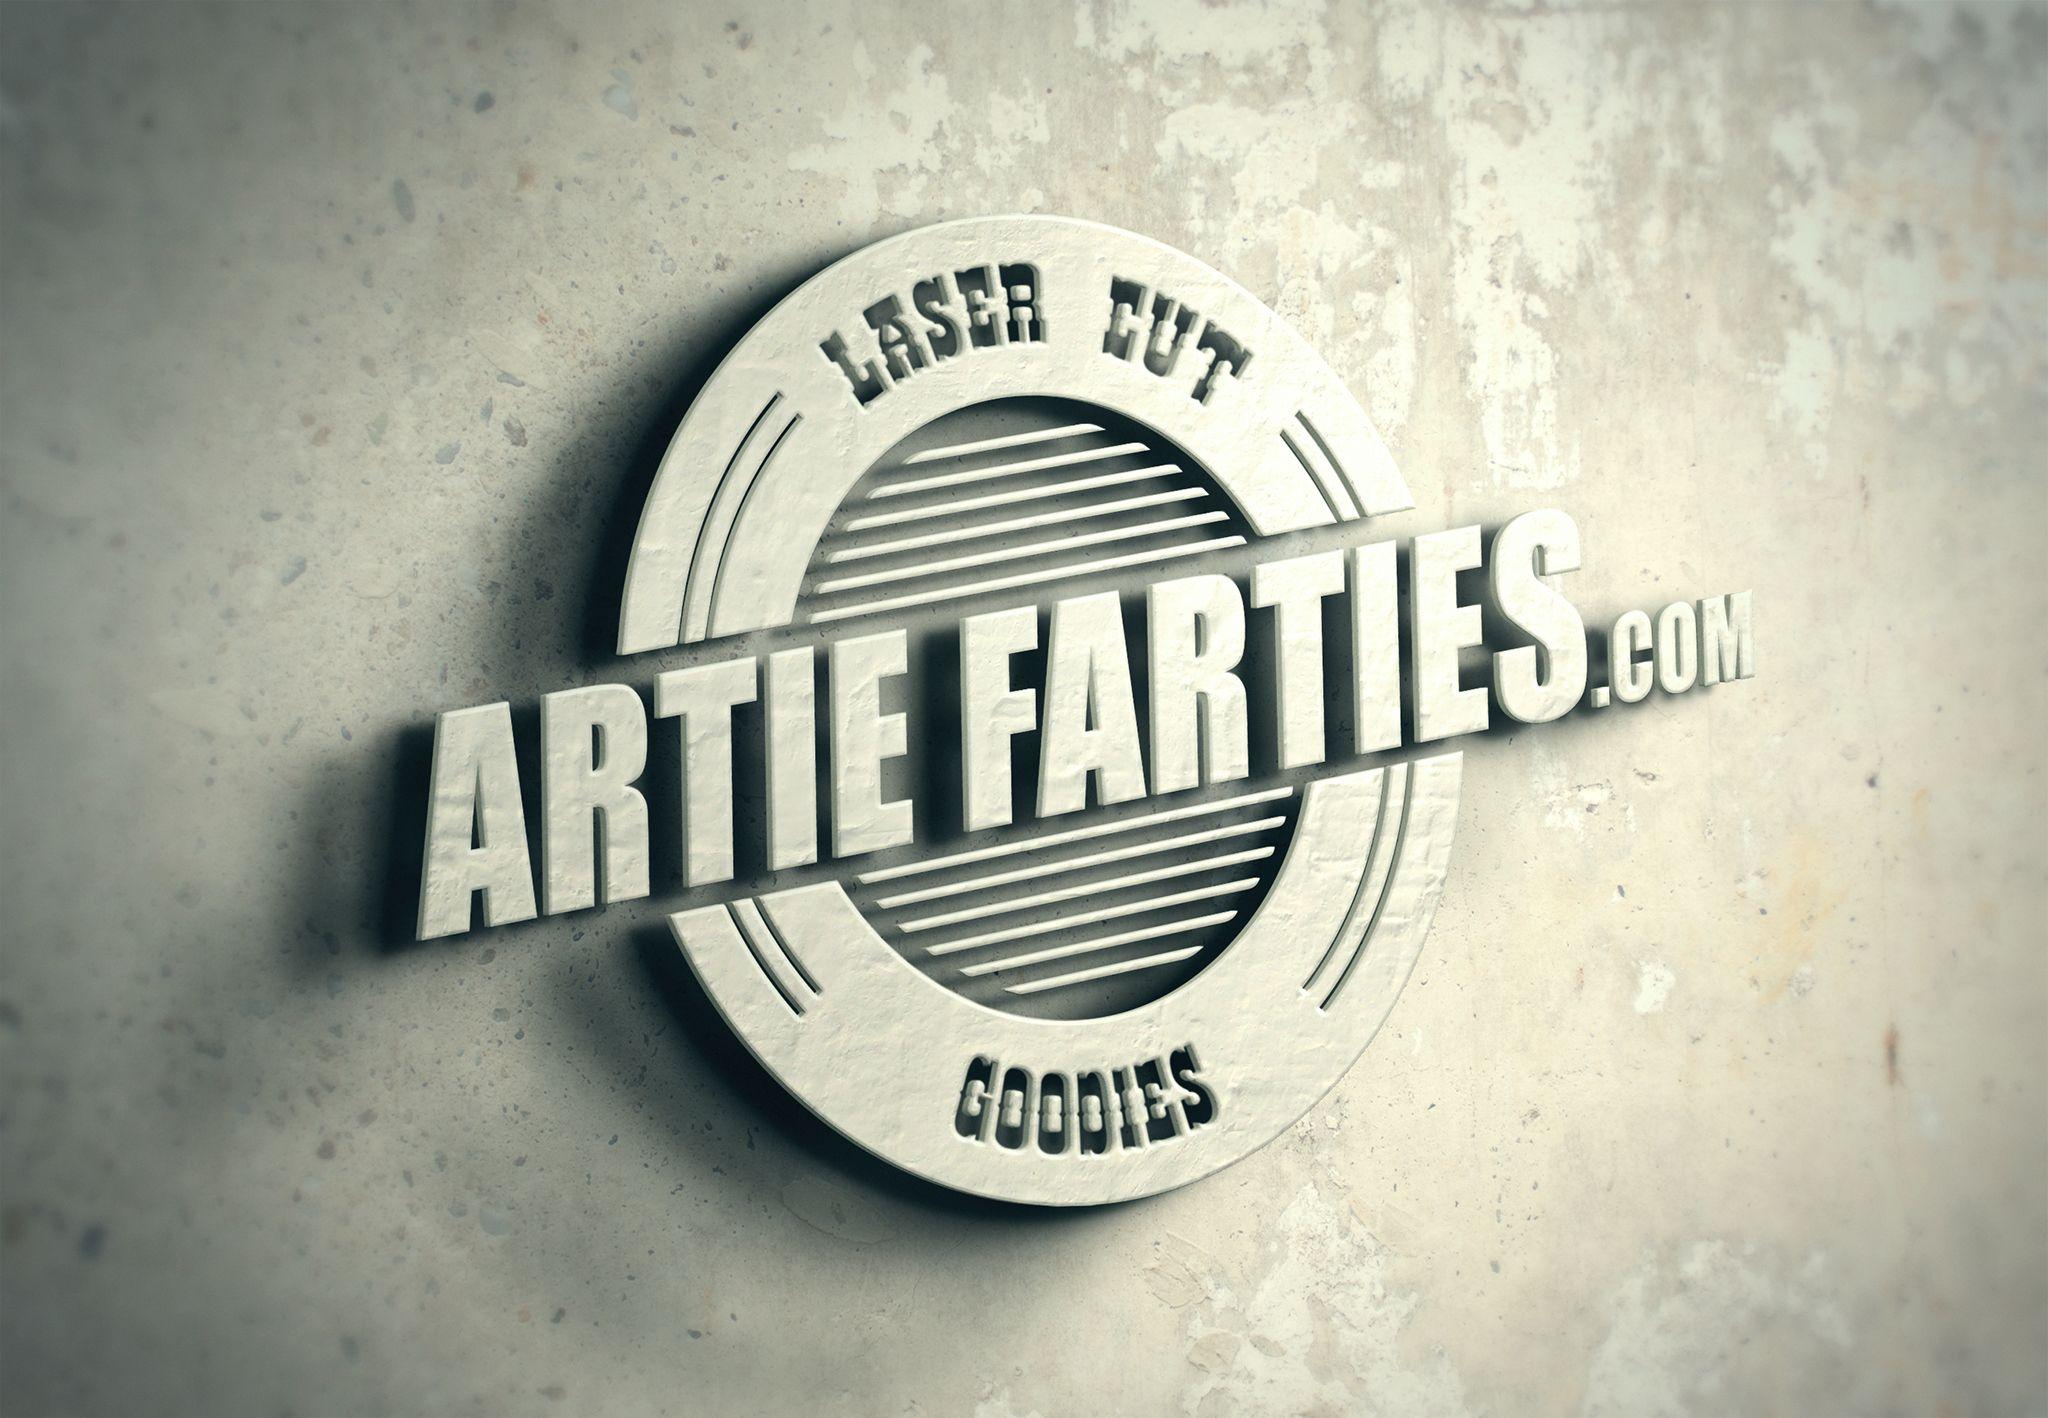 Artie Logo - New logo for Artie Farties - Artie Farties